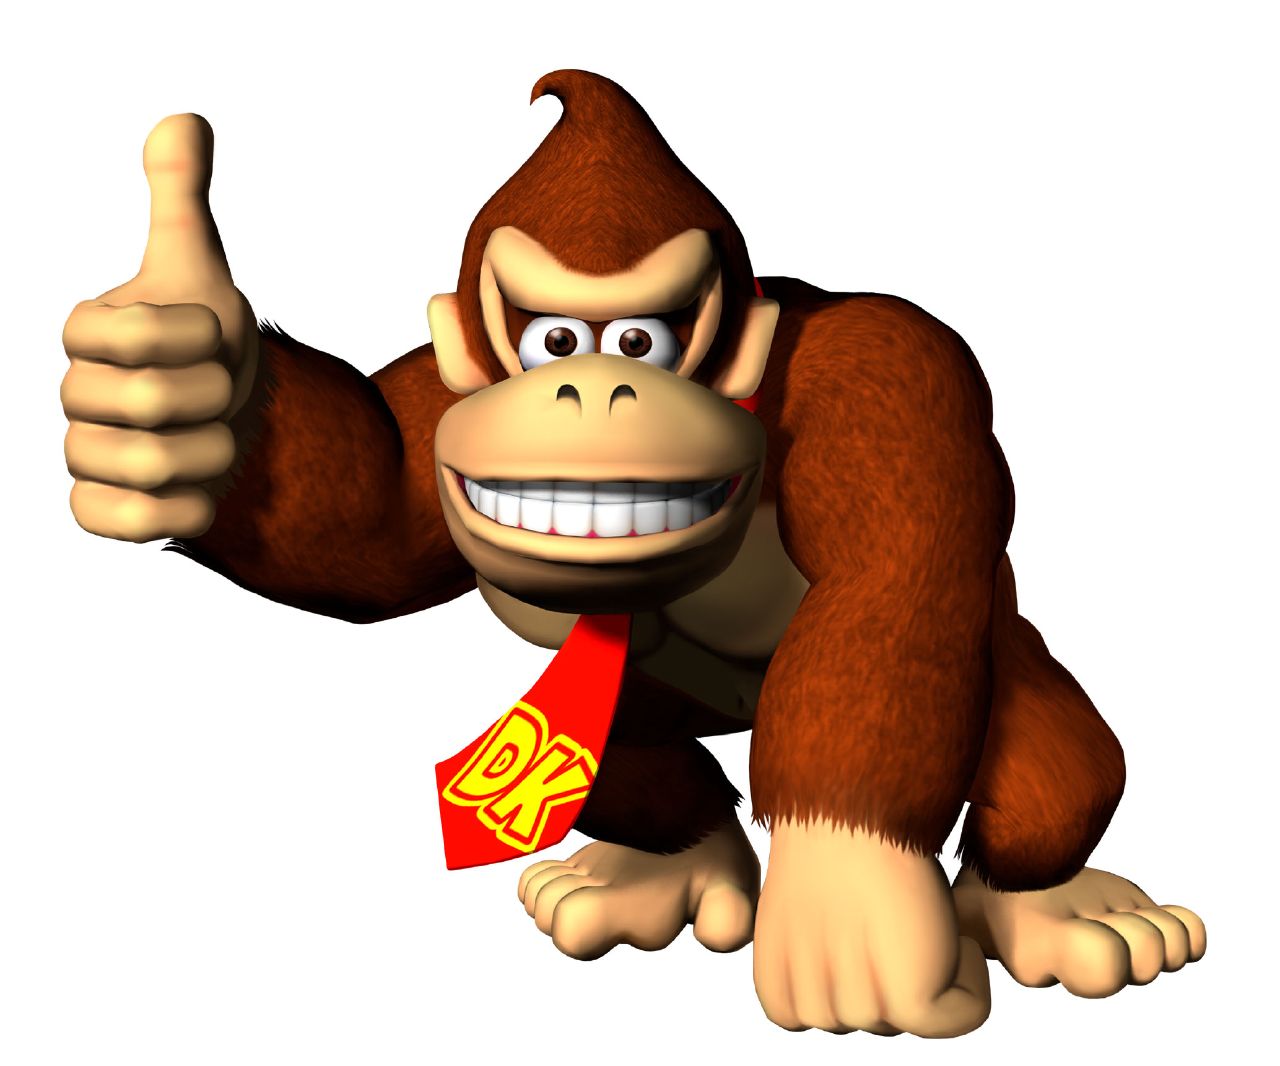 Novo vídeo do Canal Atemporal Geek retrata a história de Donkey Kong